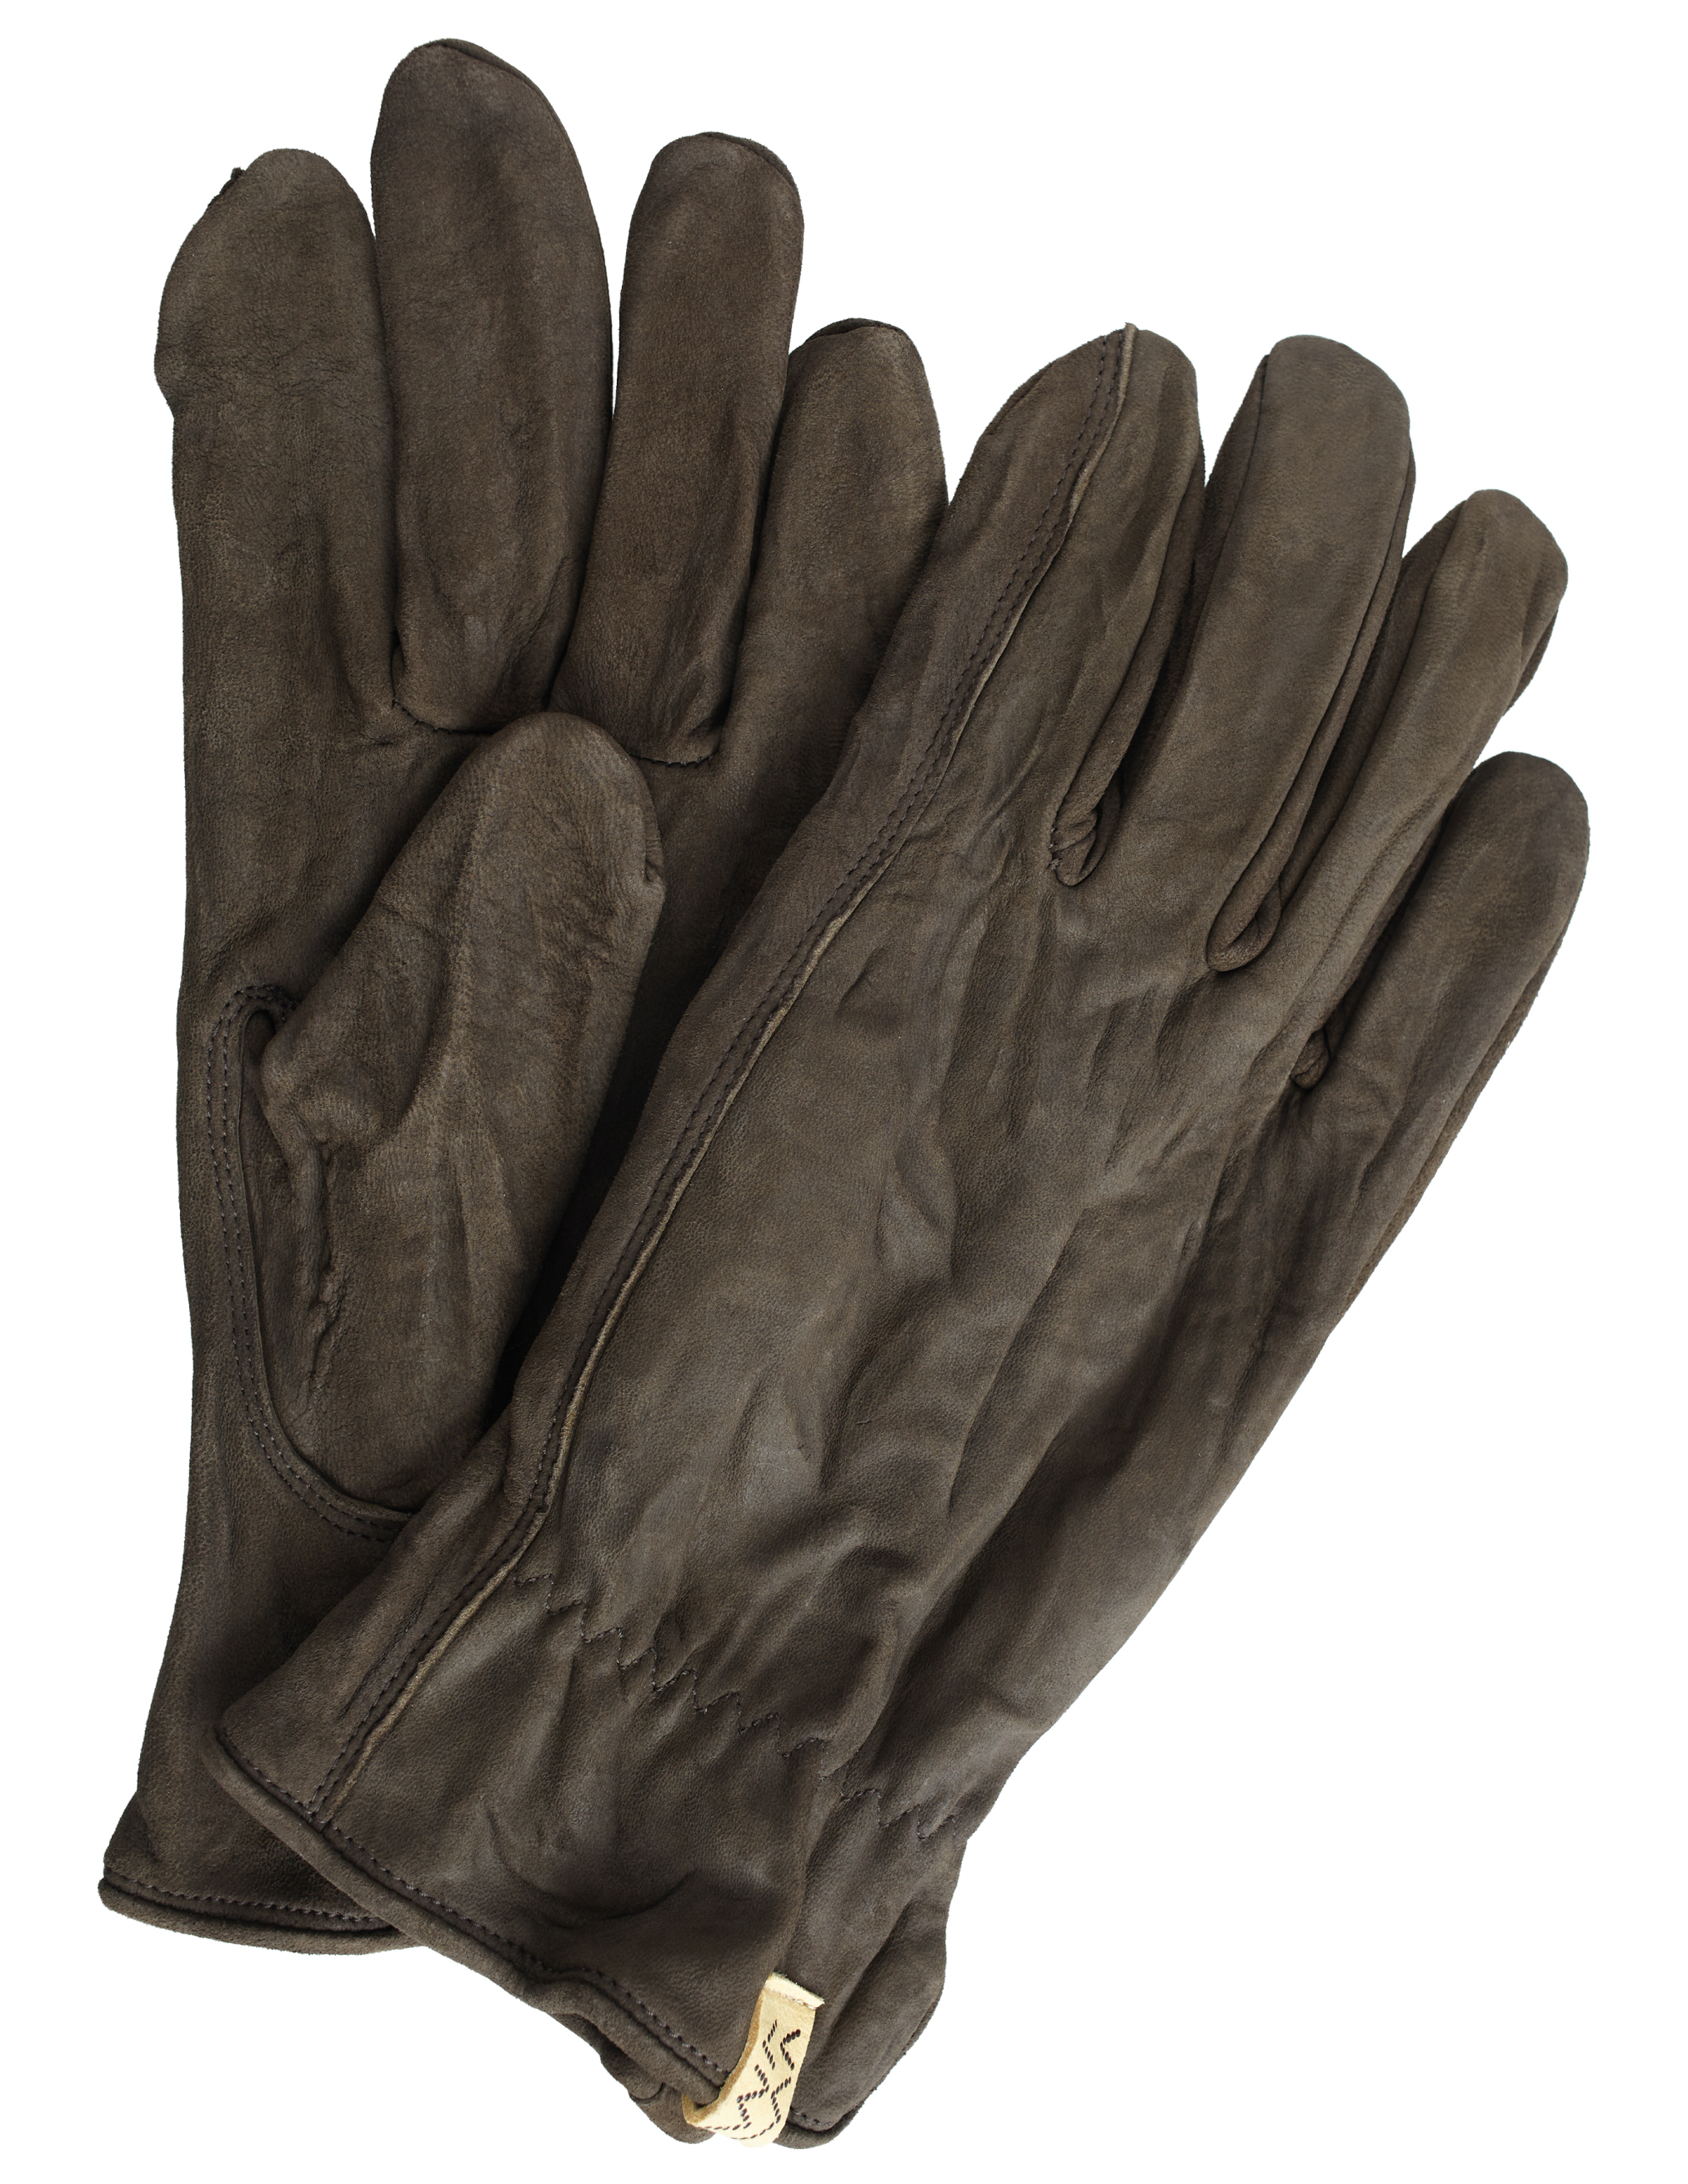 Коричневые замшевые перчатки visvim 0123203003008/DK.BROWN, размер M/L 0123203003008/DK.BROWN - фото 2